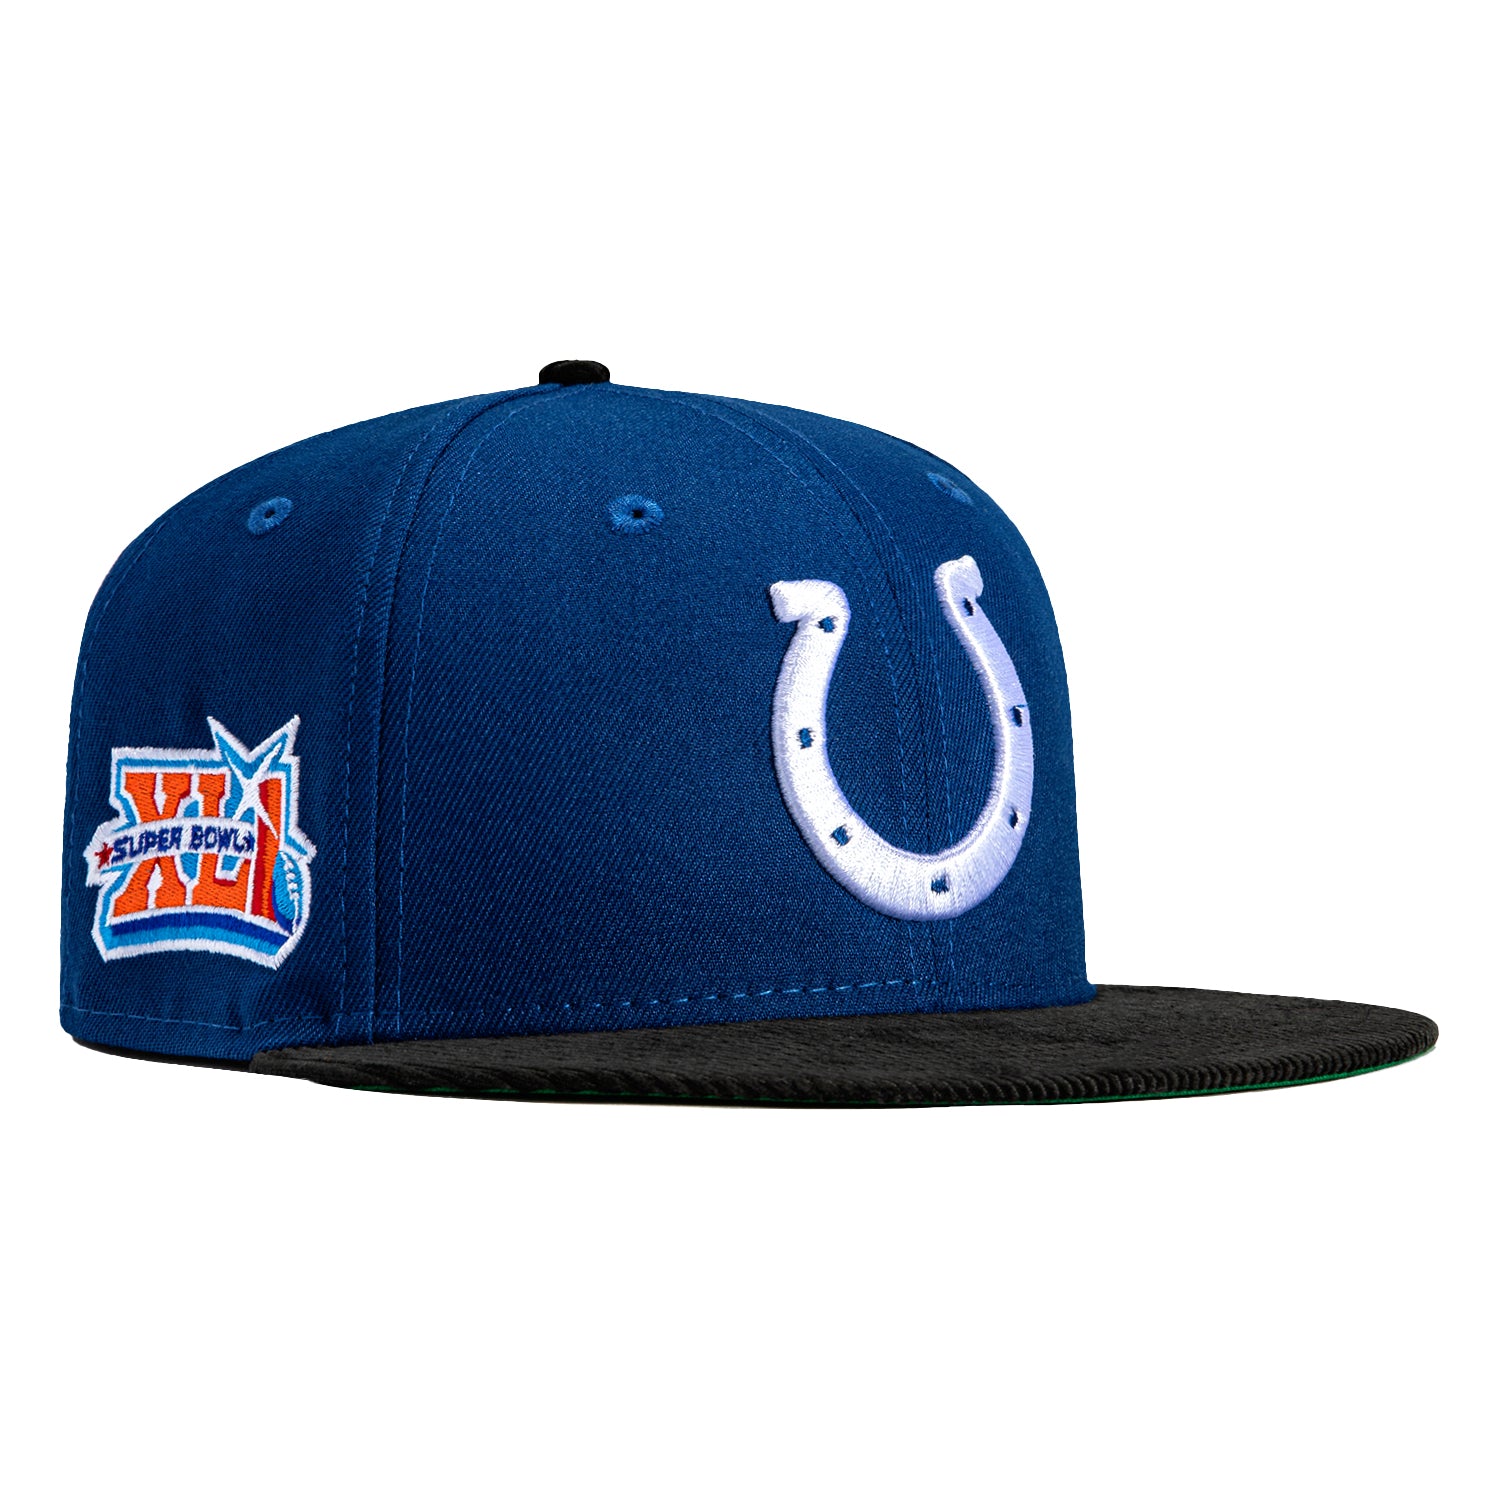 Indianapolis Colts Super Bowl Champions Hat Adjustable NFL 